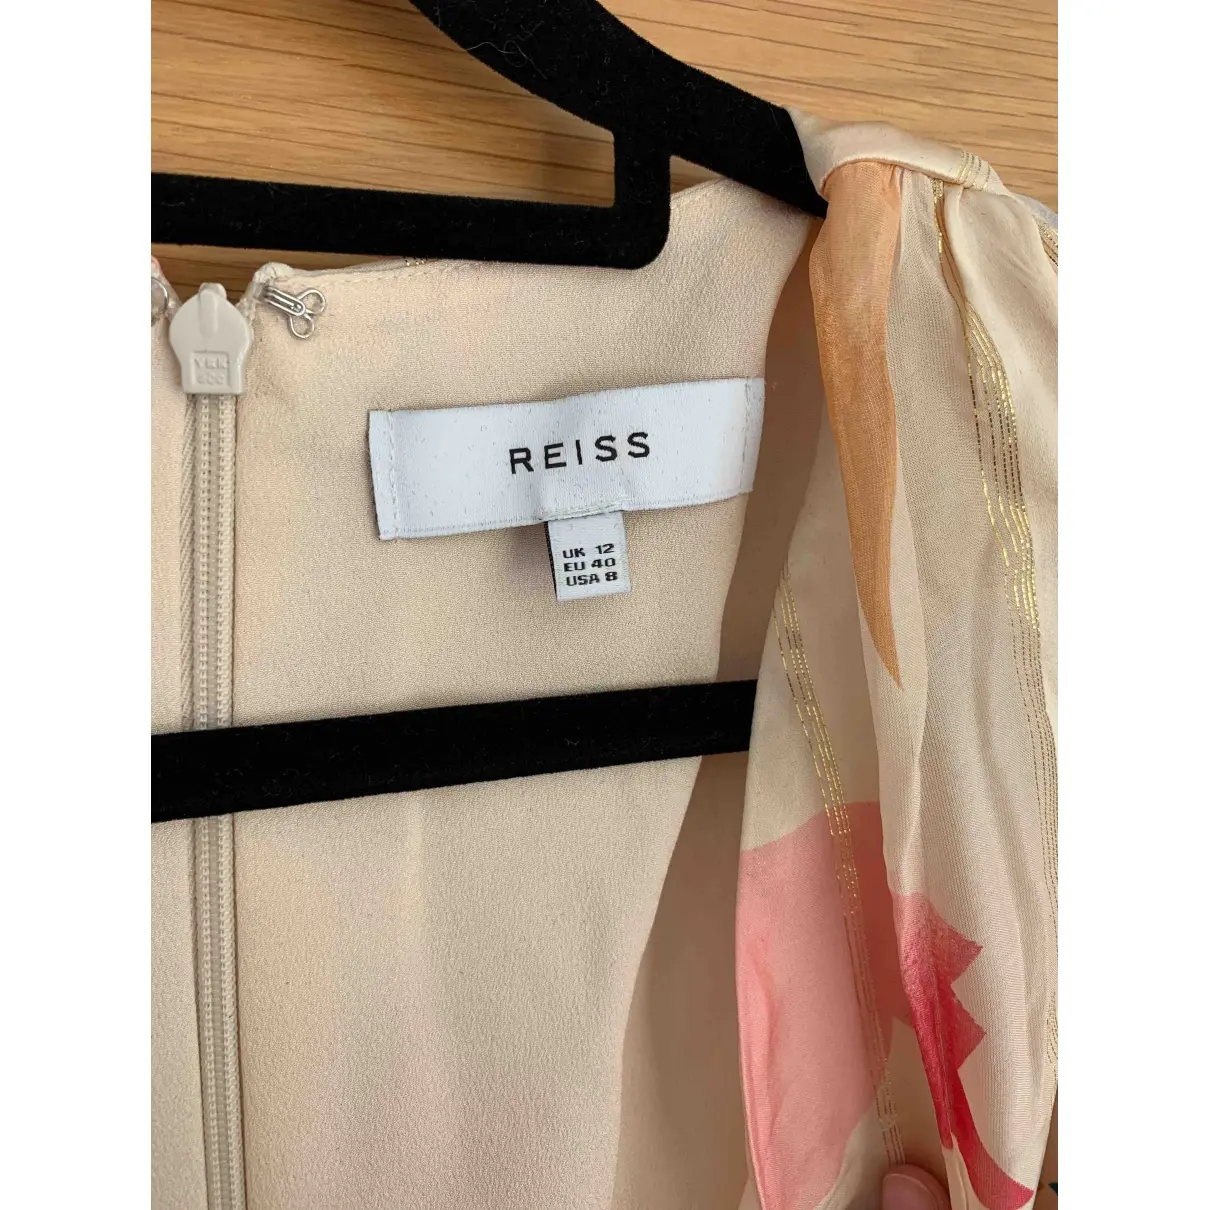 Buy Reiss Silk mid-length dress online